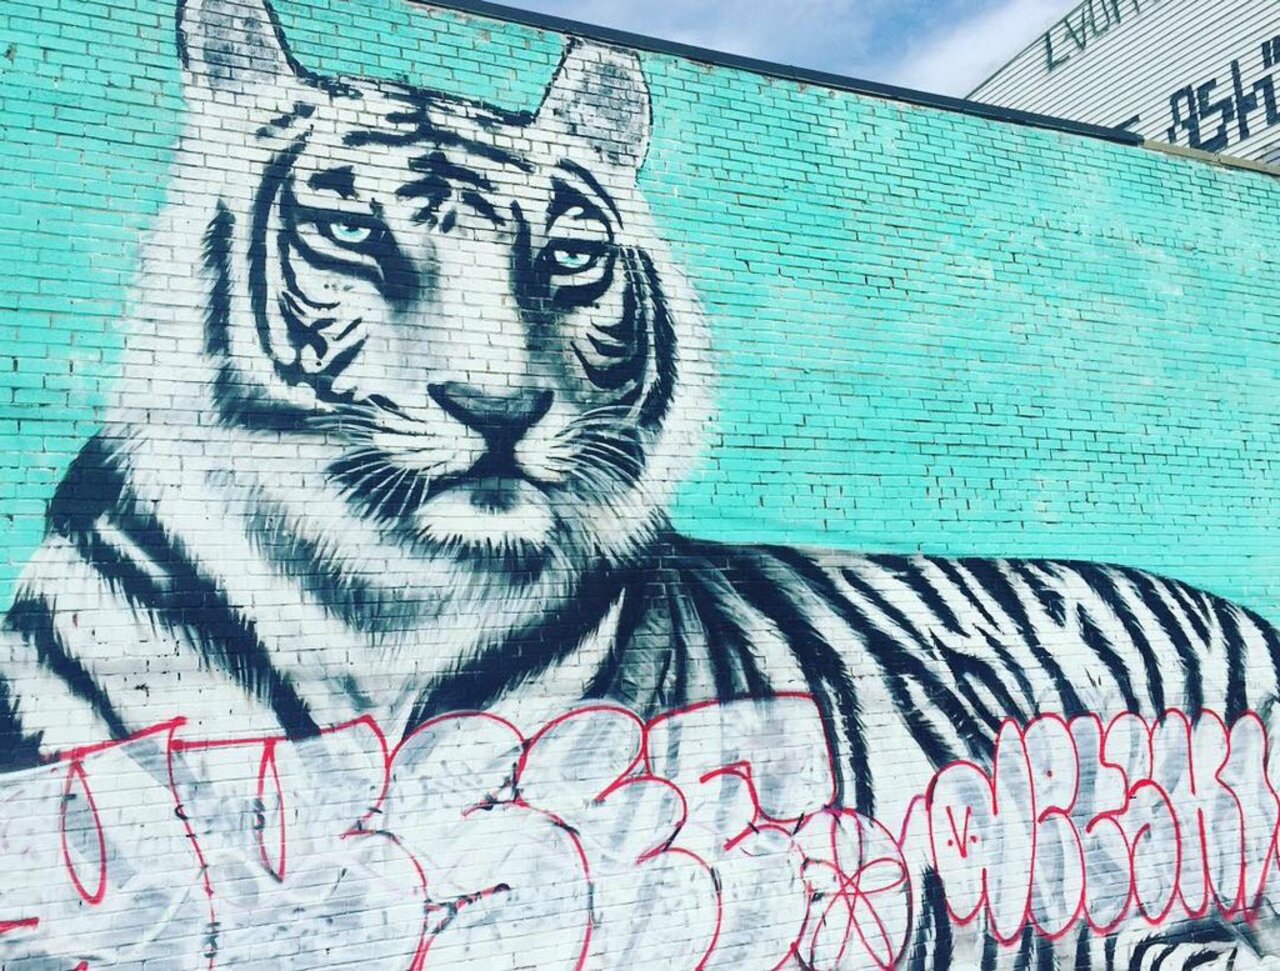 MT @circumjacent: #NewYorkCity #graffiti photo by @willsav84 https://instagram.com/p/9JvIgUIx-i/ #StreetArt https://t.co/4vl3SnbJQB